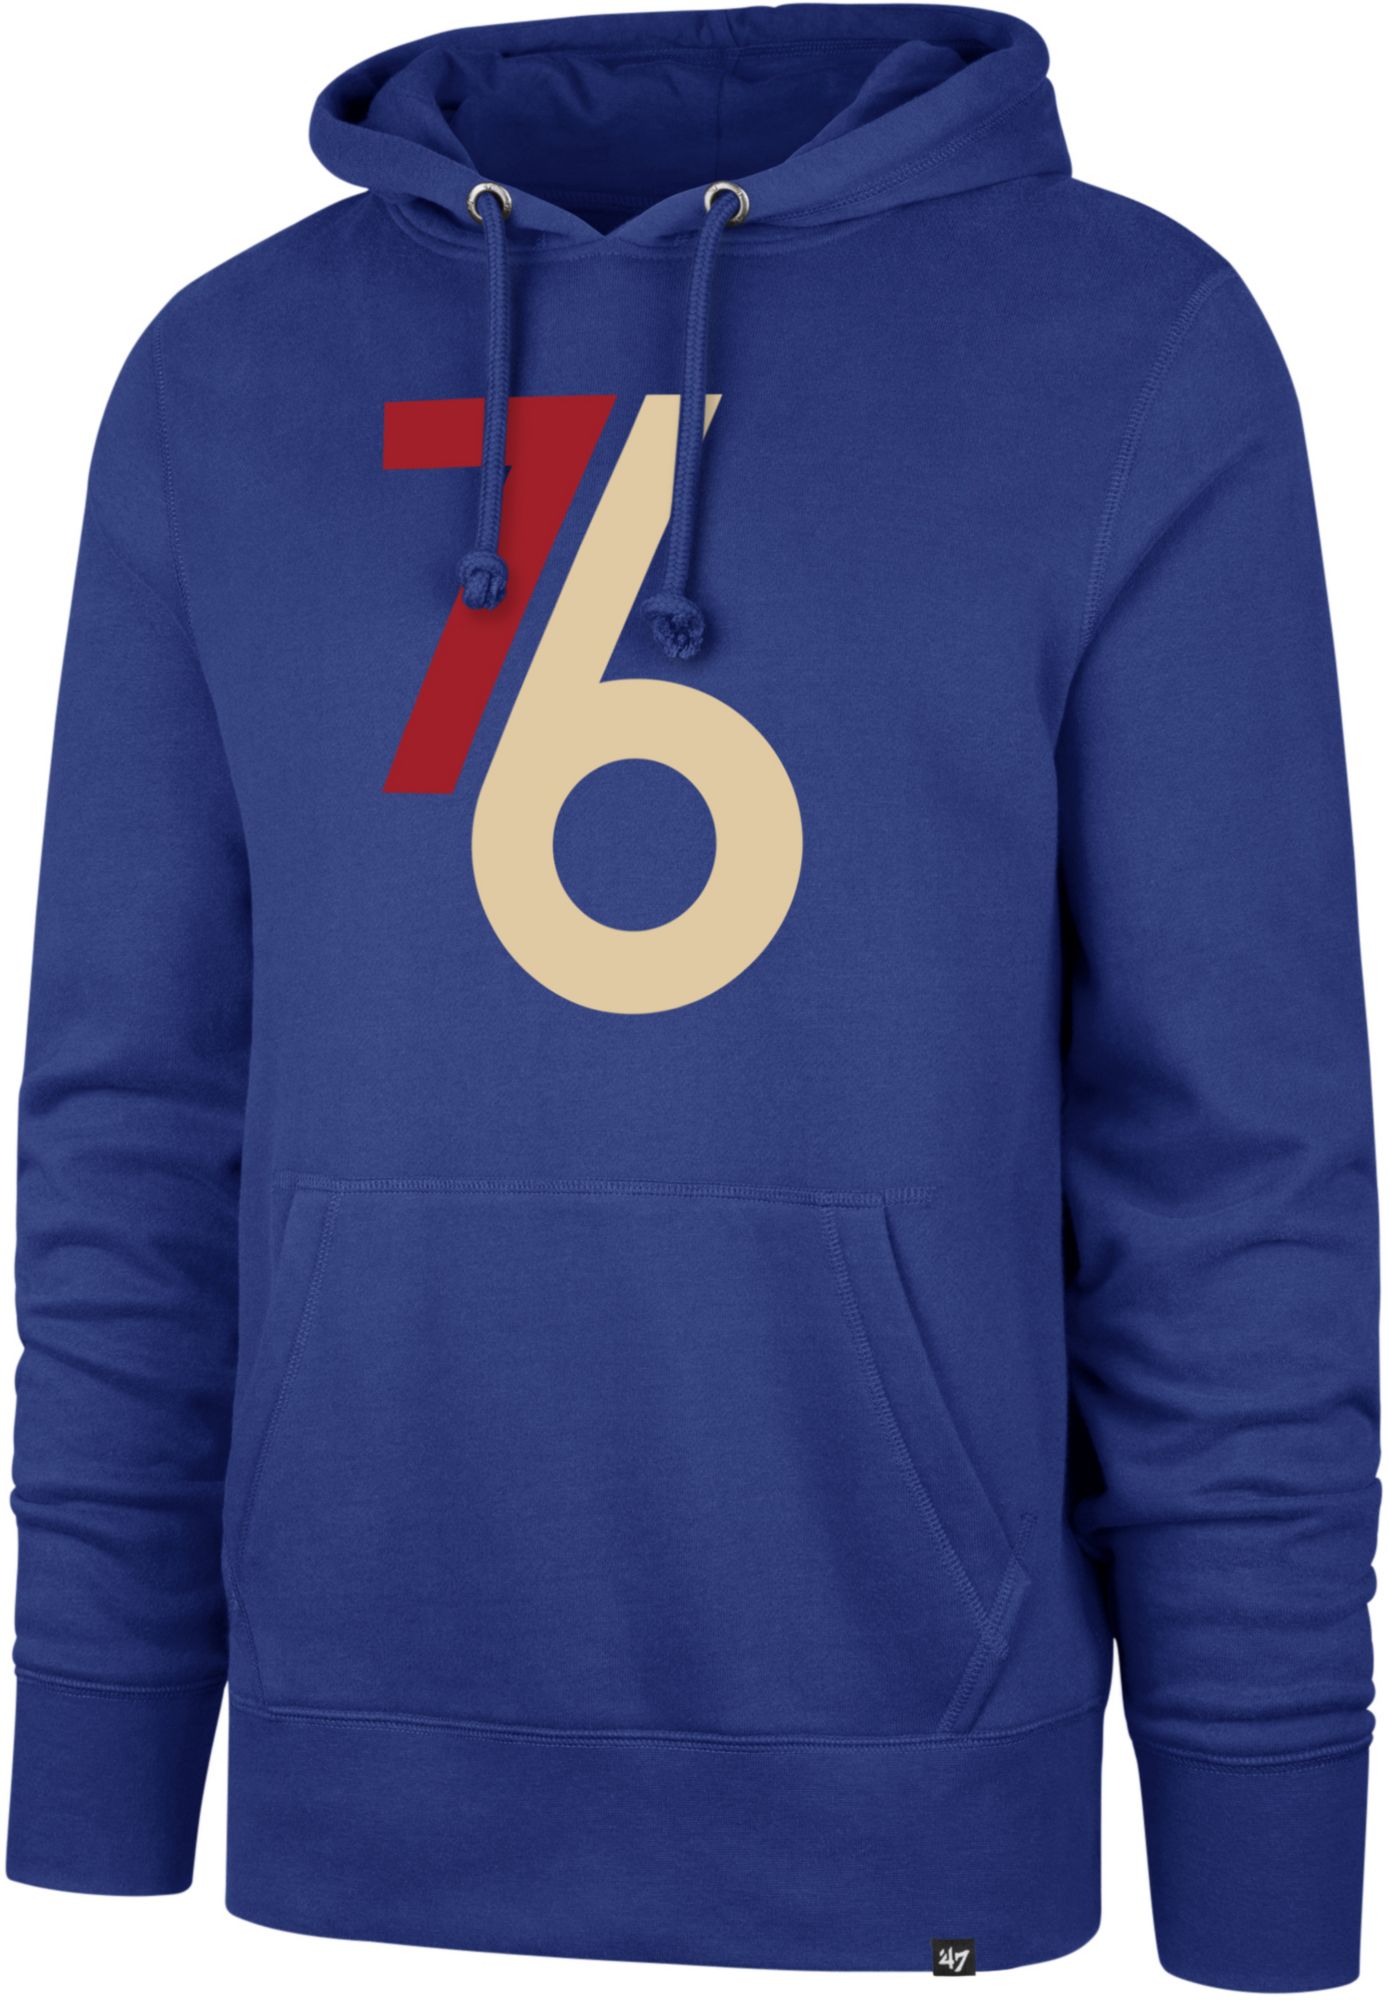 76ers hoodie city edition